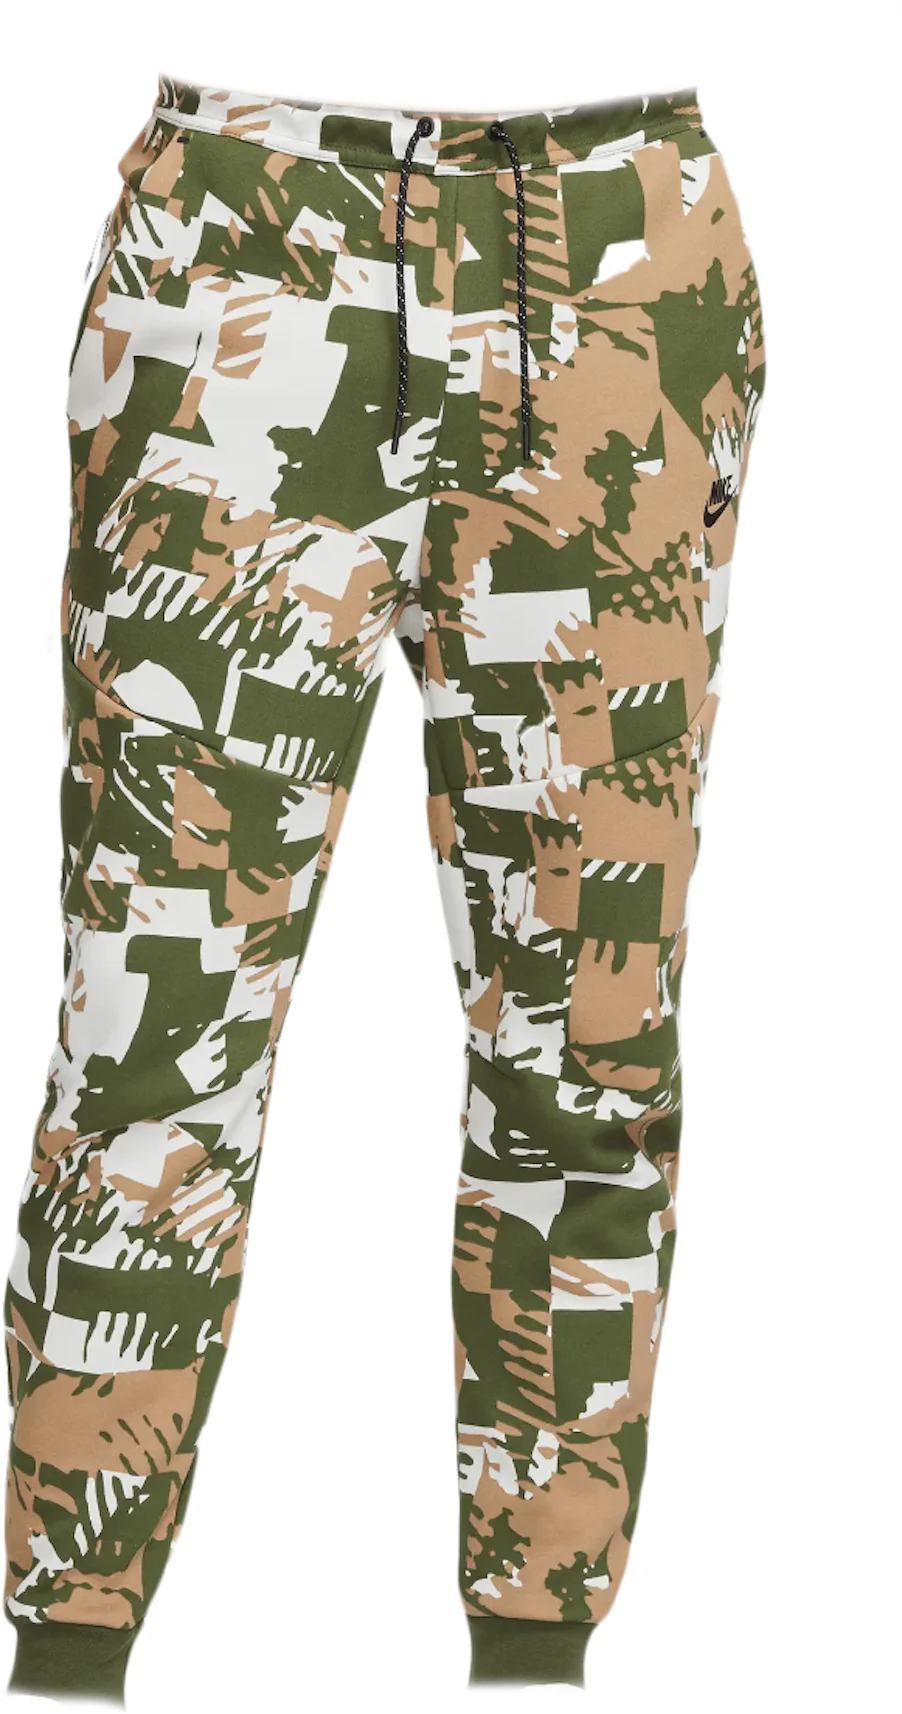 Nike NSW Camo Leggings Camouflage Activewear High Rise Green Size Medium